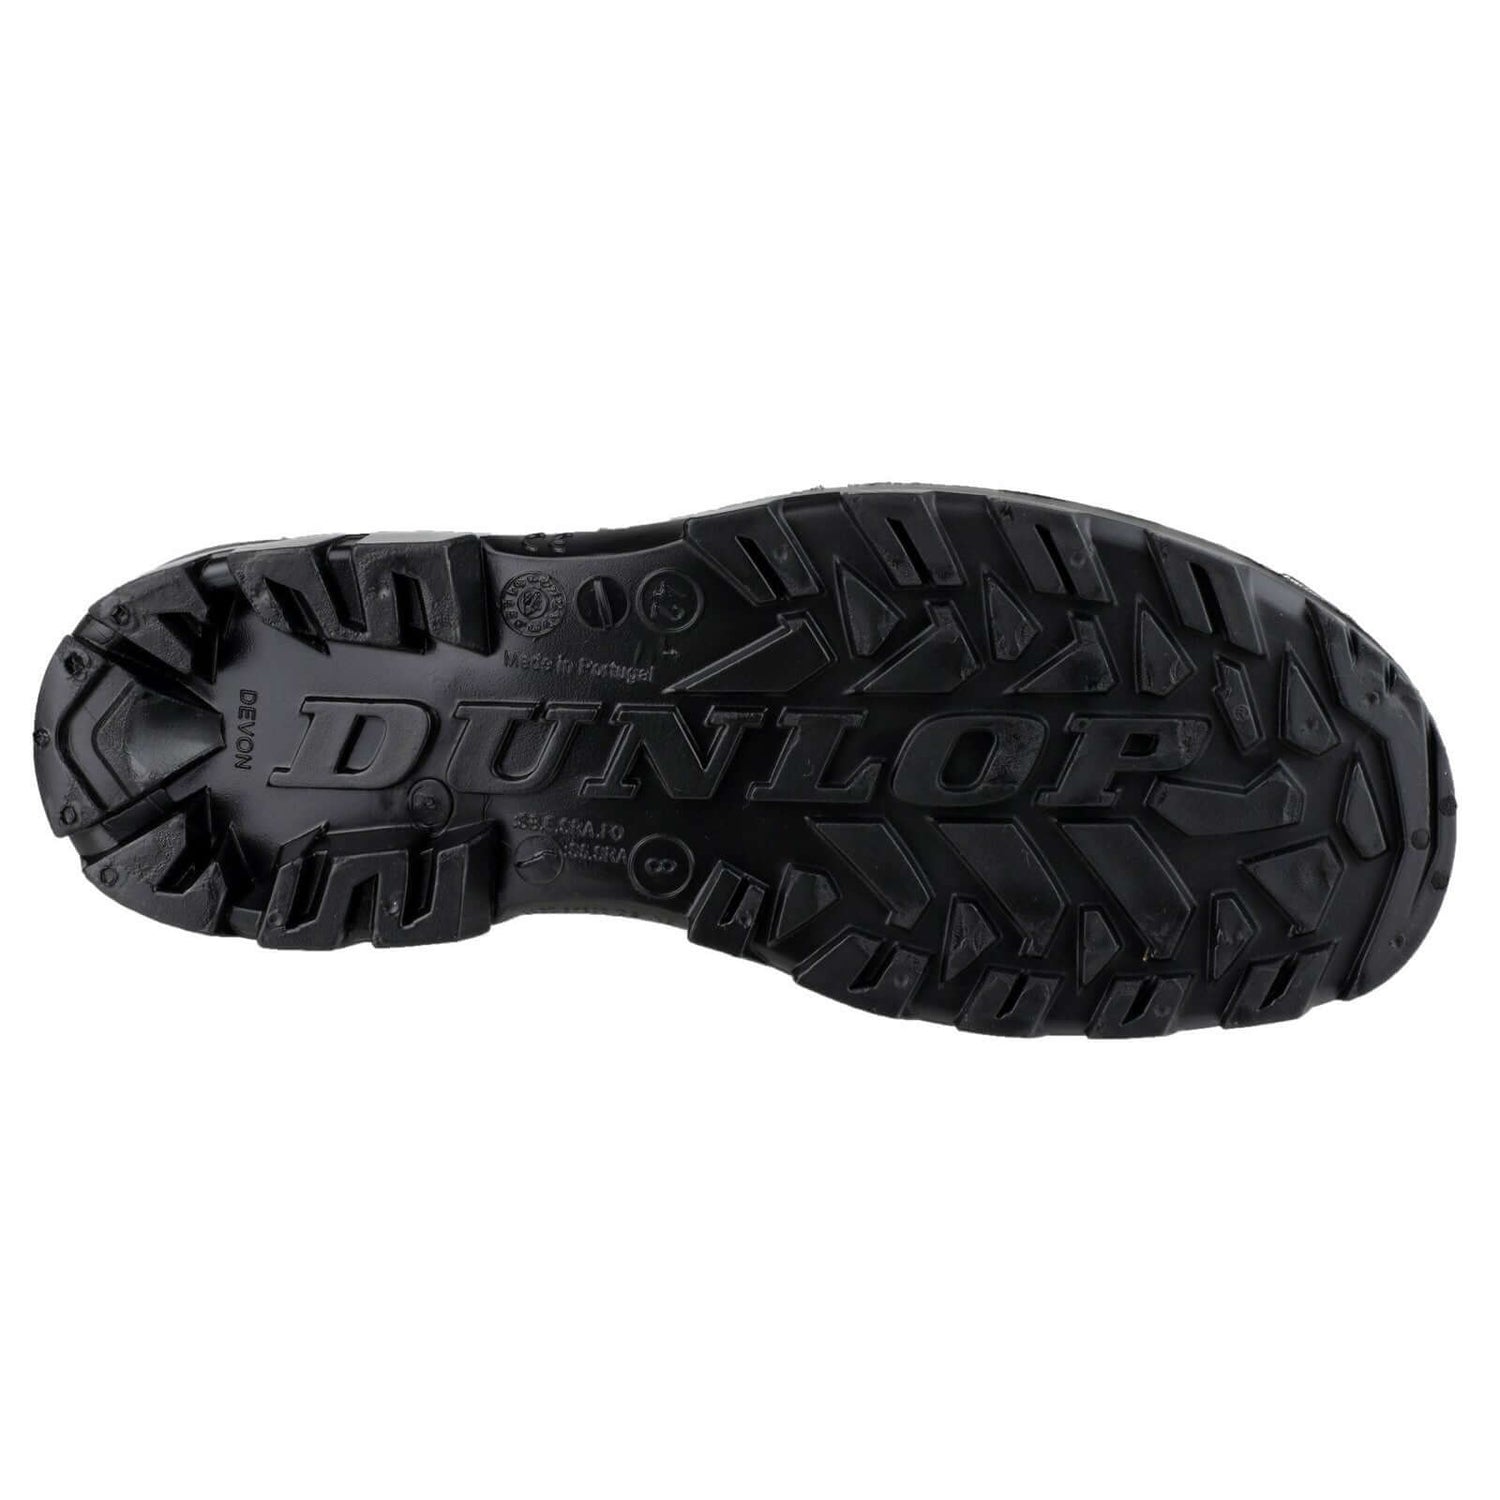 Dunlop Devon Full Safety Wellington in Black